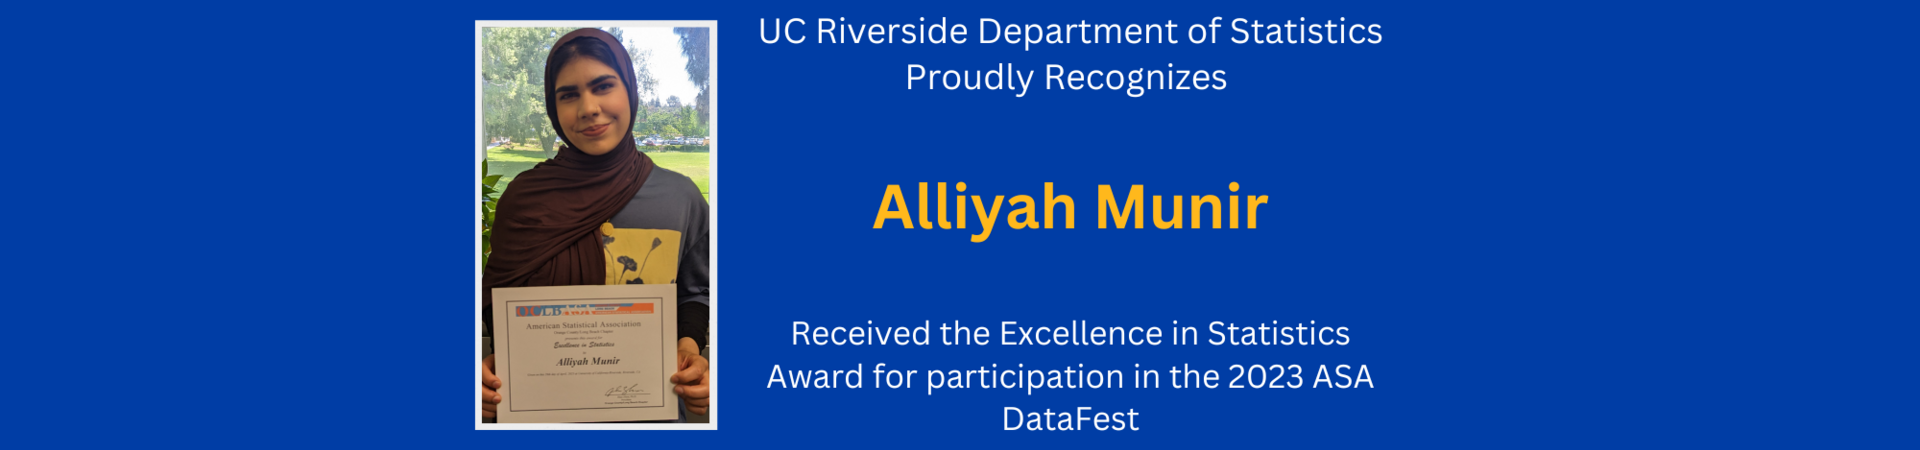 Alliyah Munir received Excellence in Statistics Award